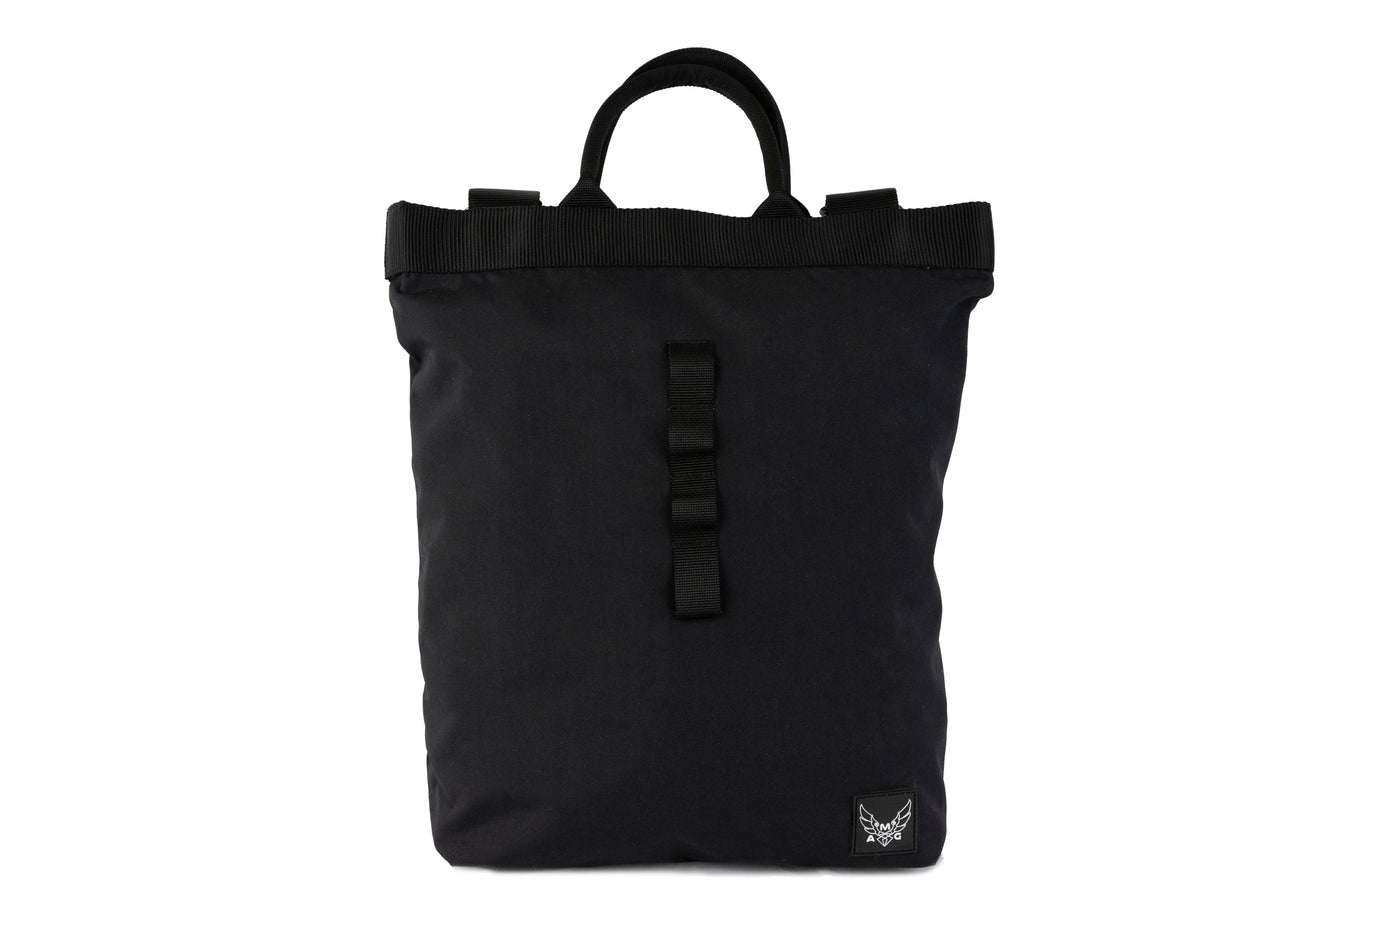 Stylish black tote bag